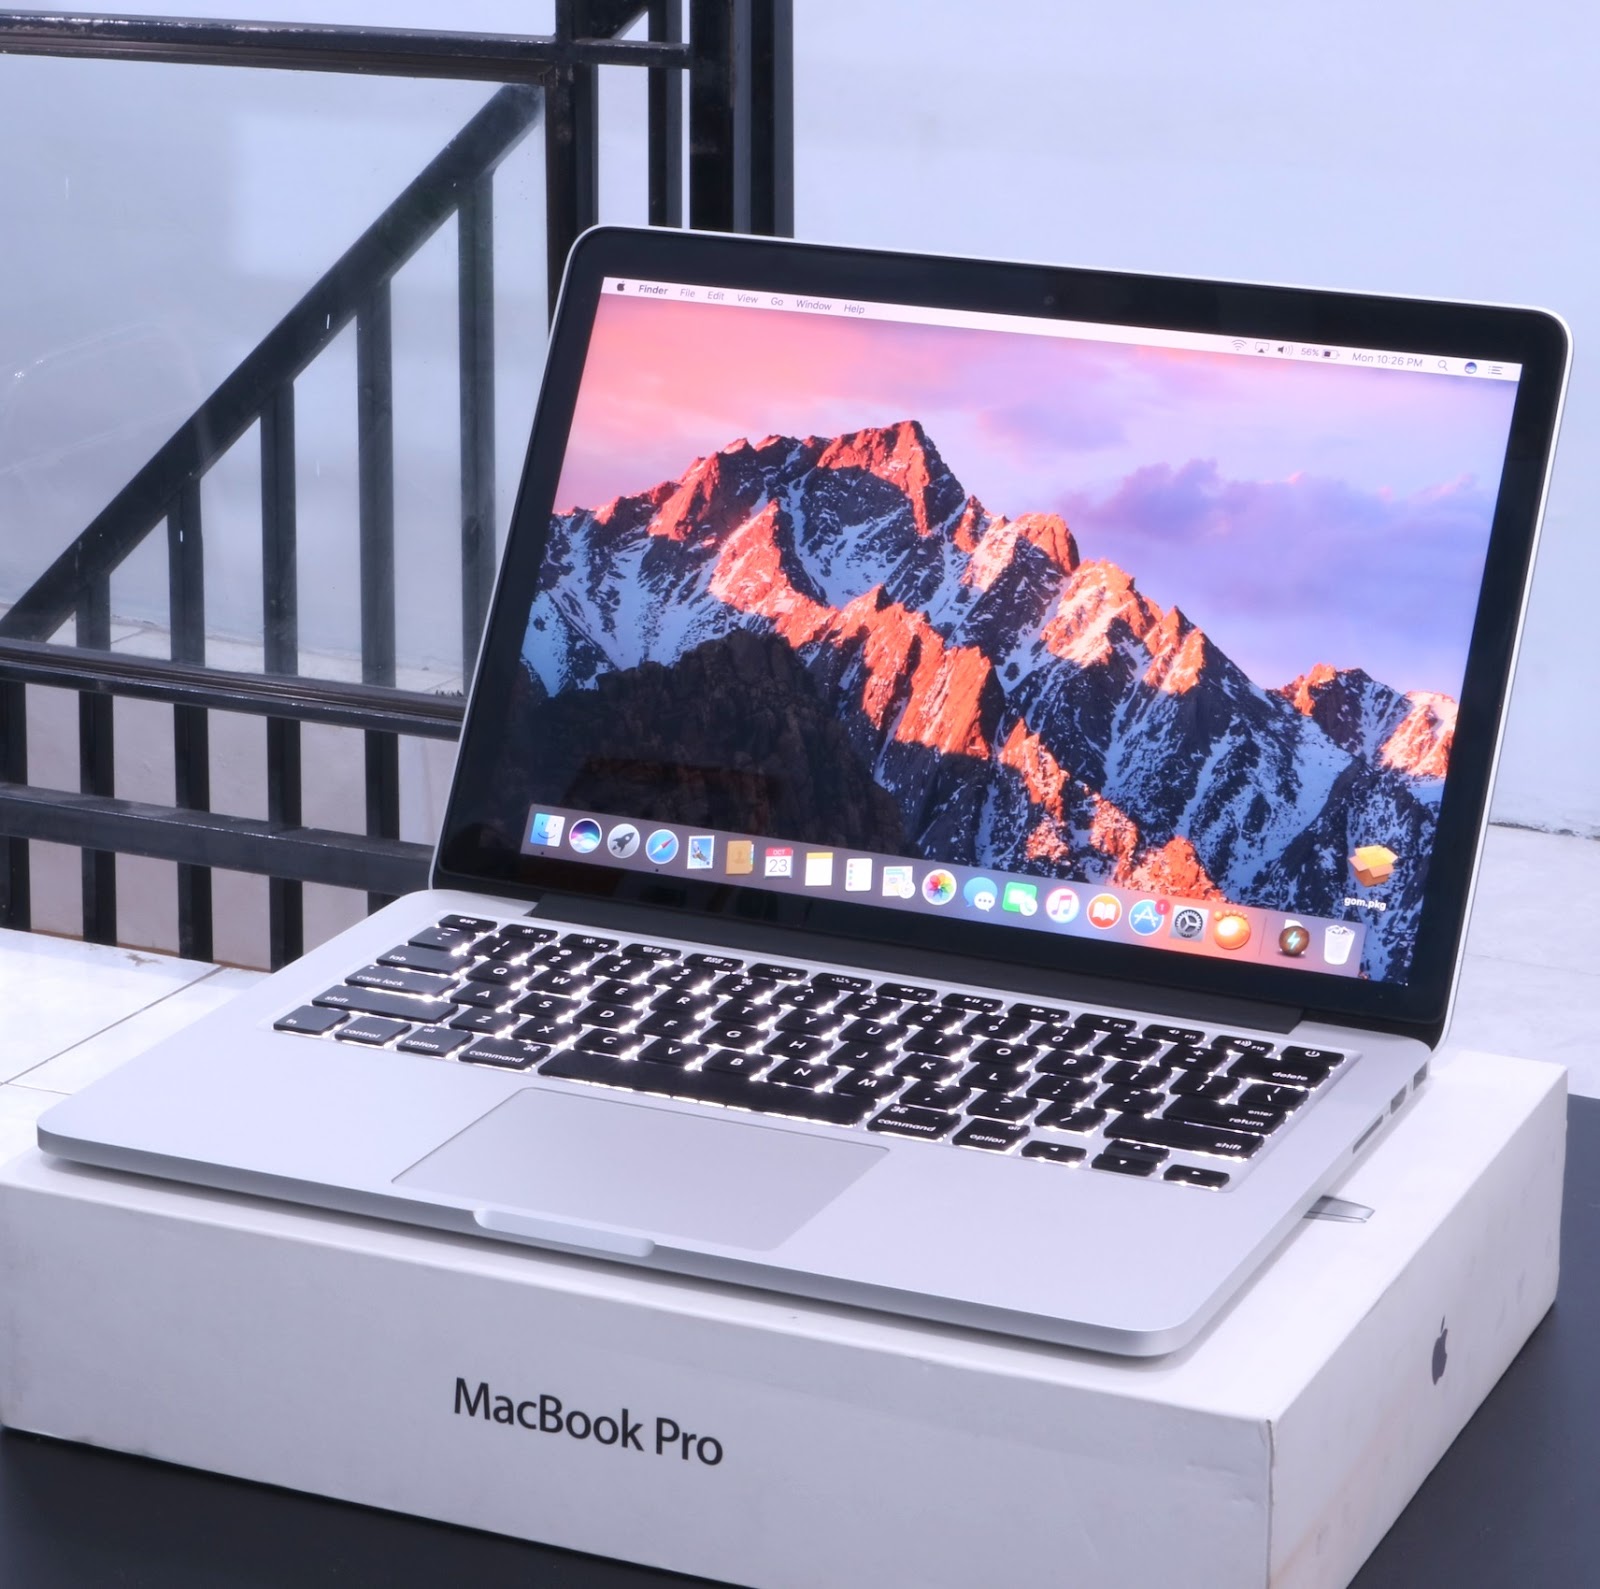 MacBook Pro Ratina 13-inch Mid 2014